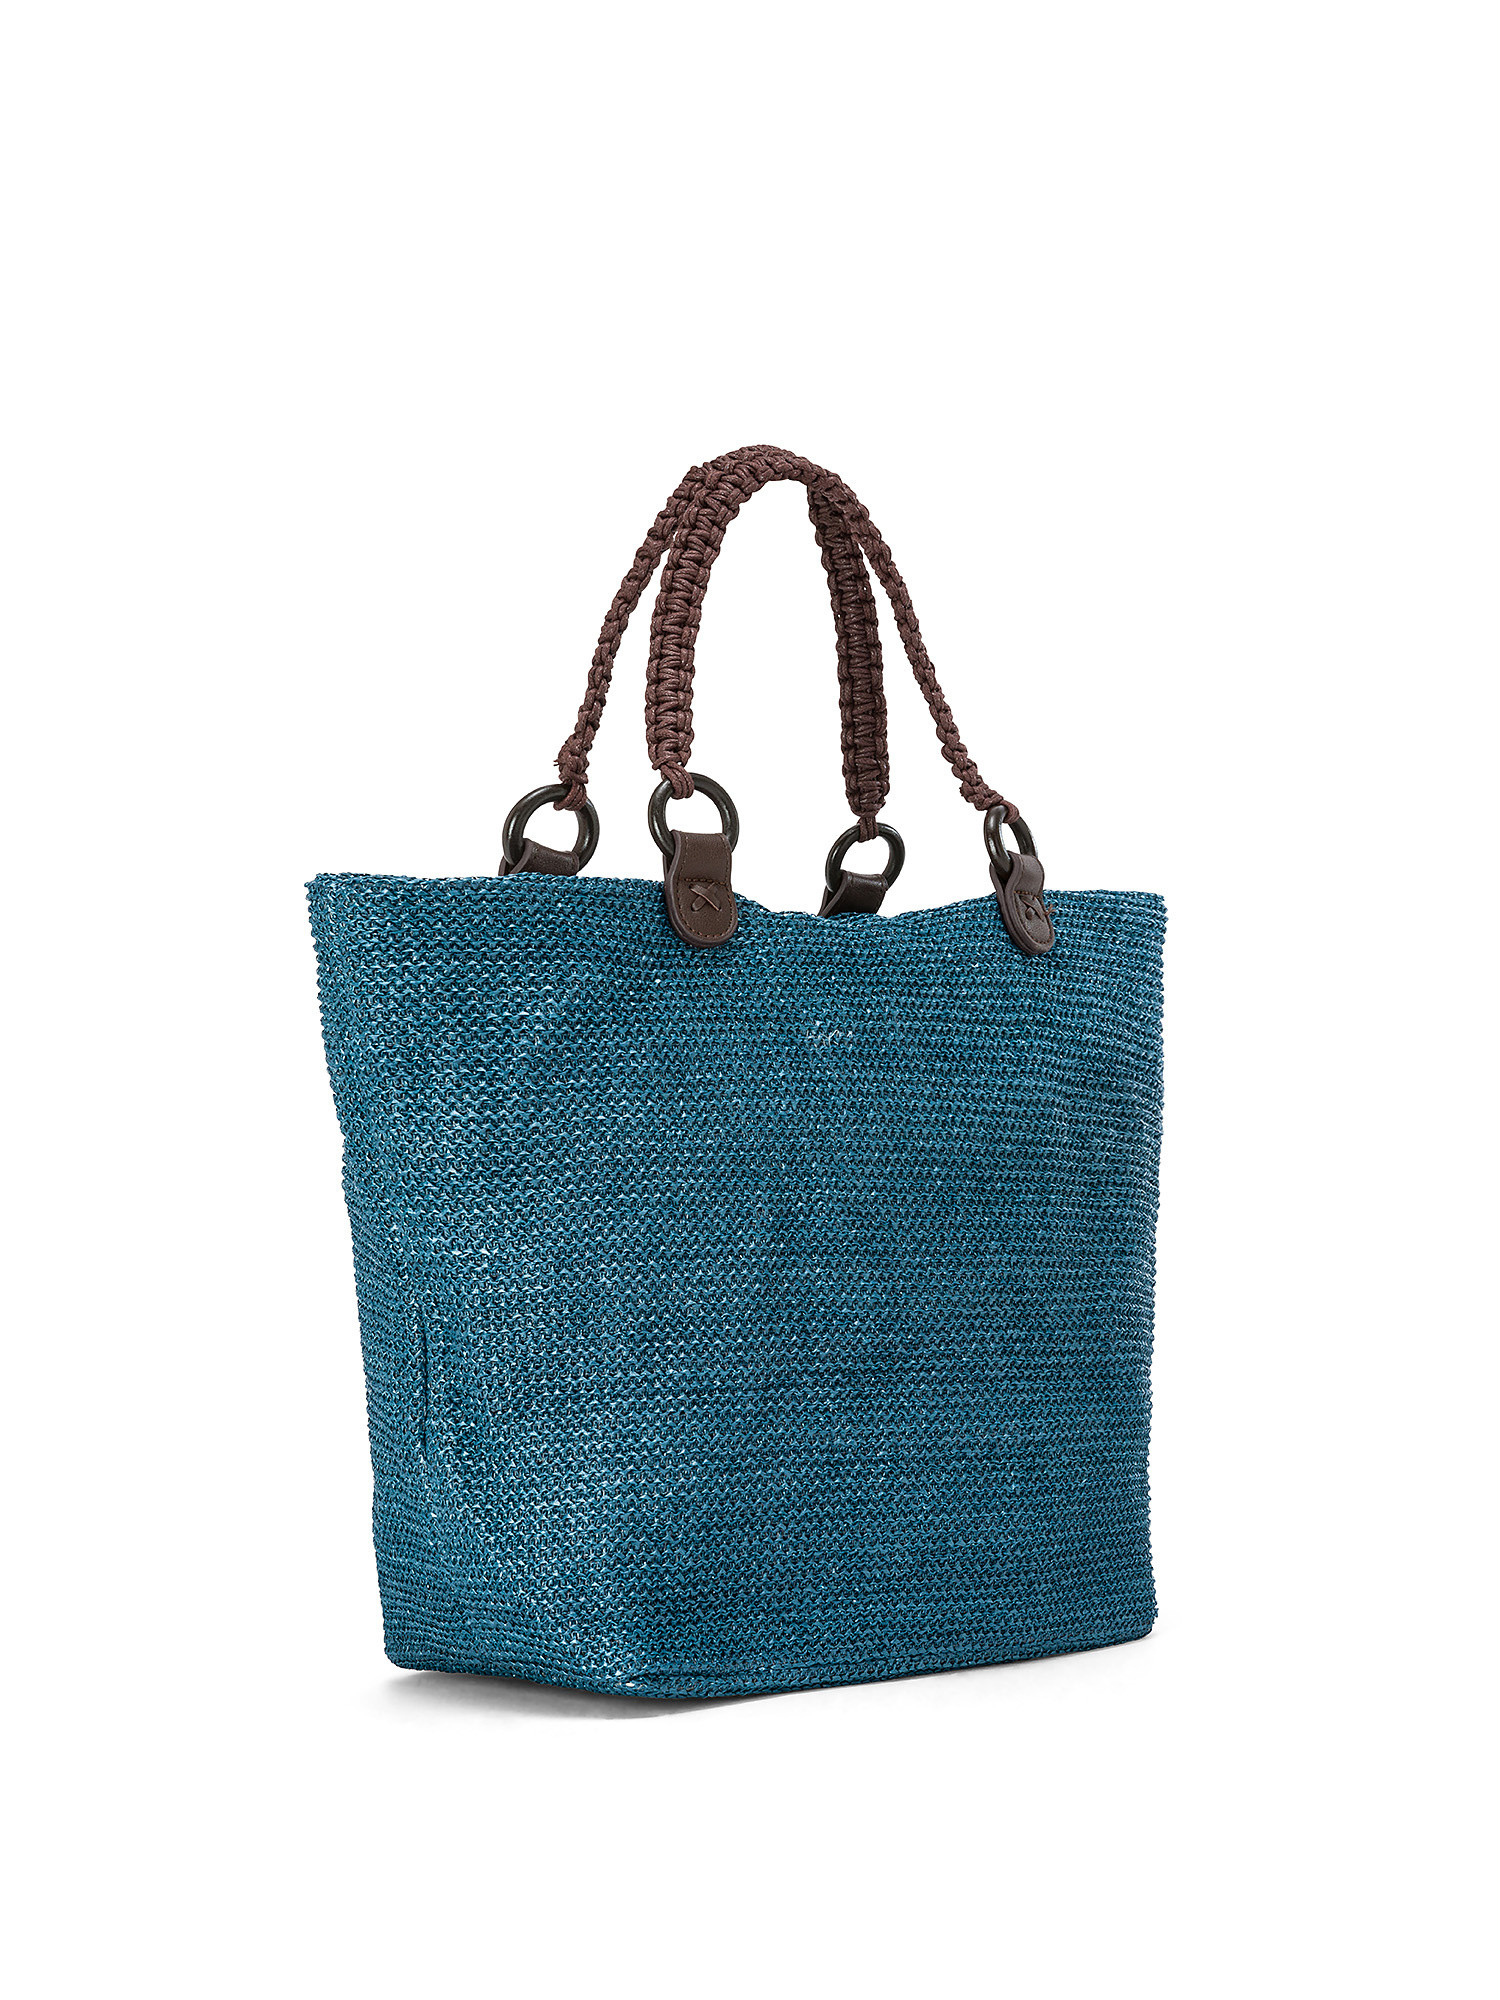 Koan - Shopping bag, Blue, large image number 1